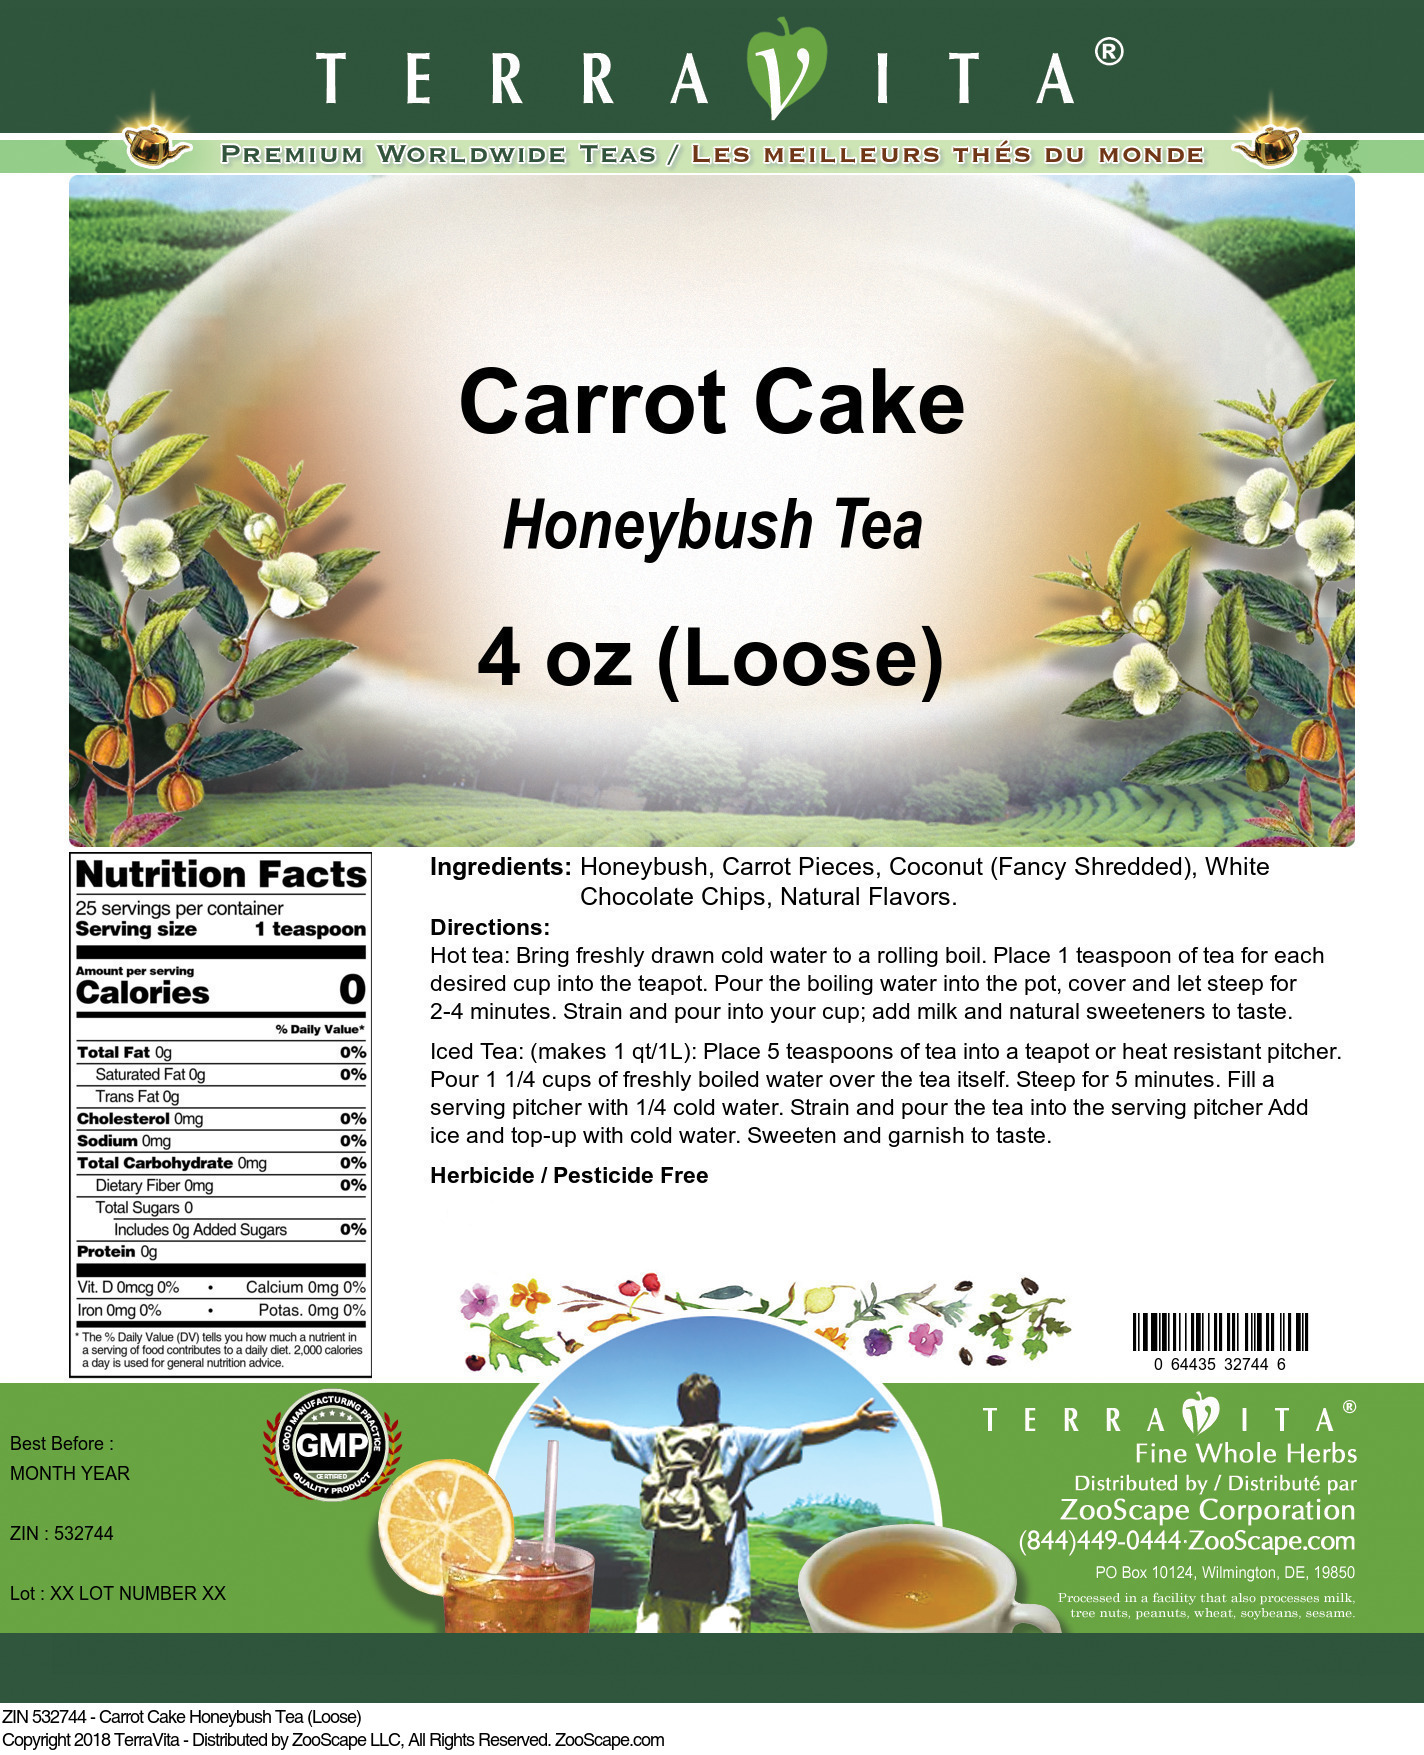 Carrot Cake Honeybush Tea (Loose) - Label